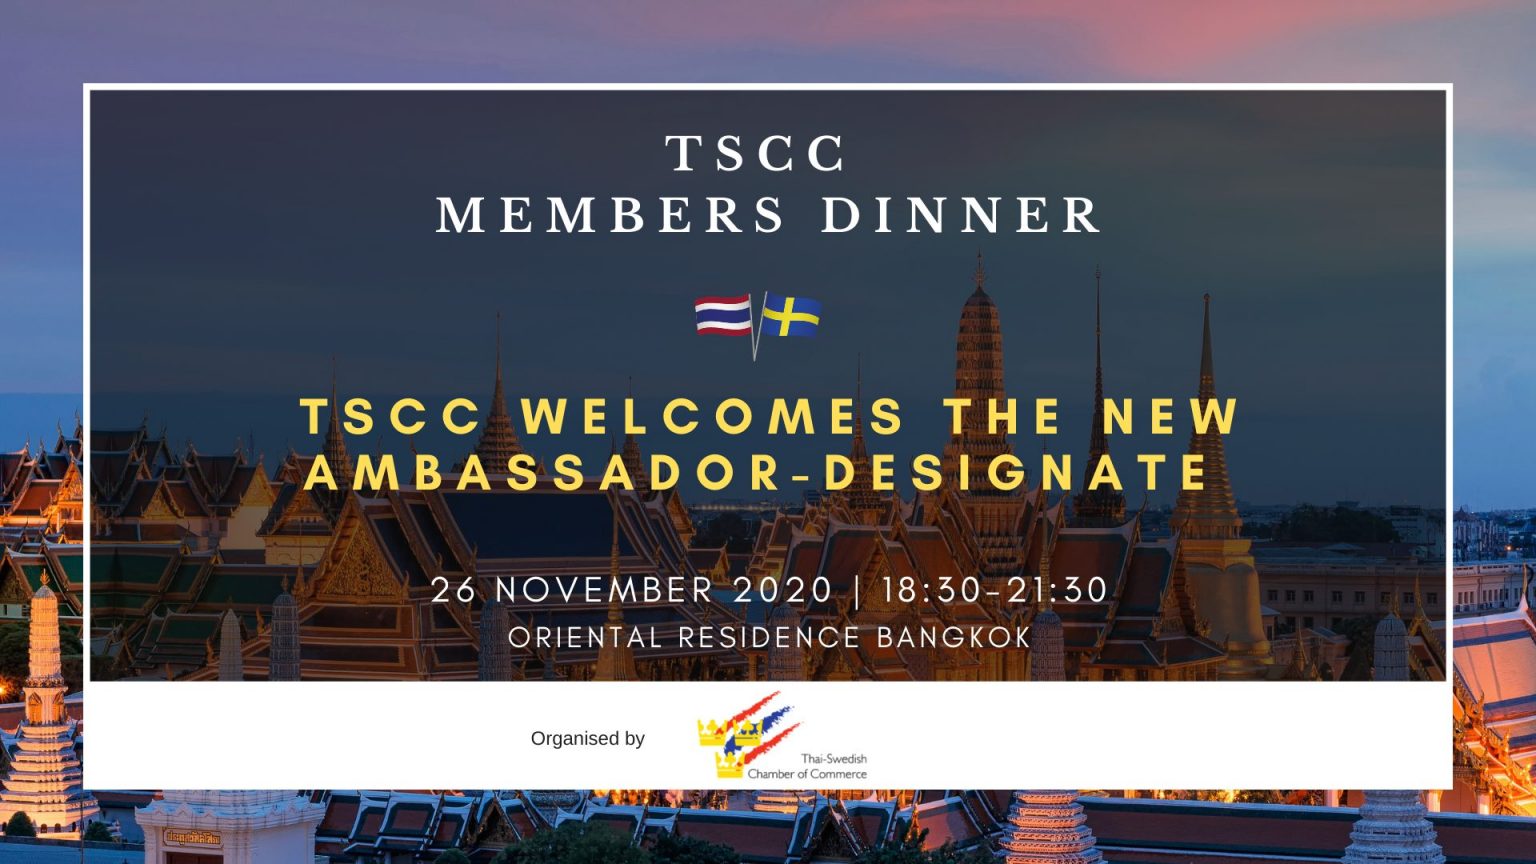 Thai-Swedish Chamber of Commerce invites to a dinner with the new Ambassador-Designate Dinner on 26 Nov